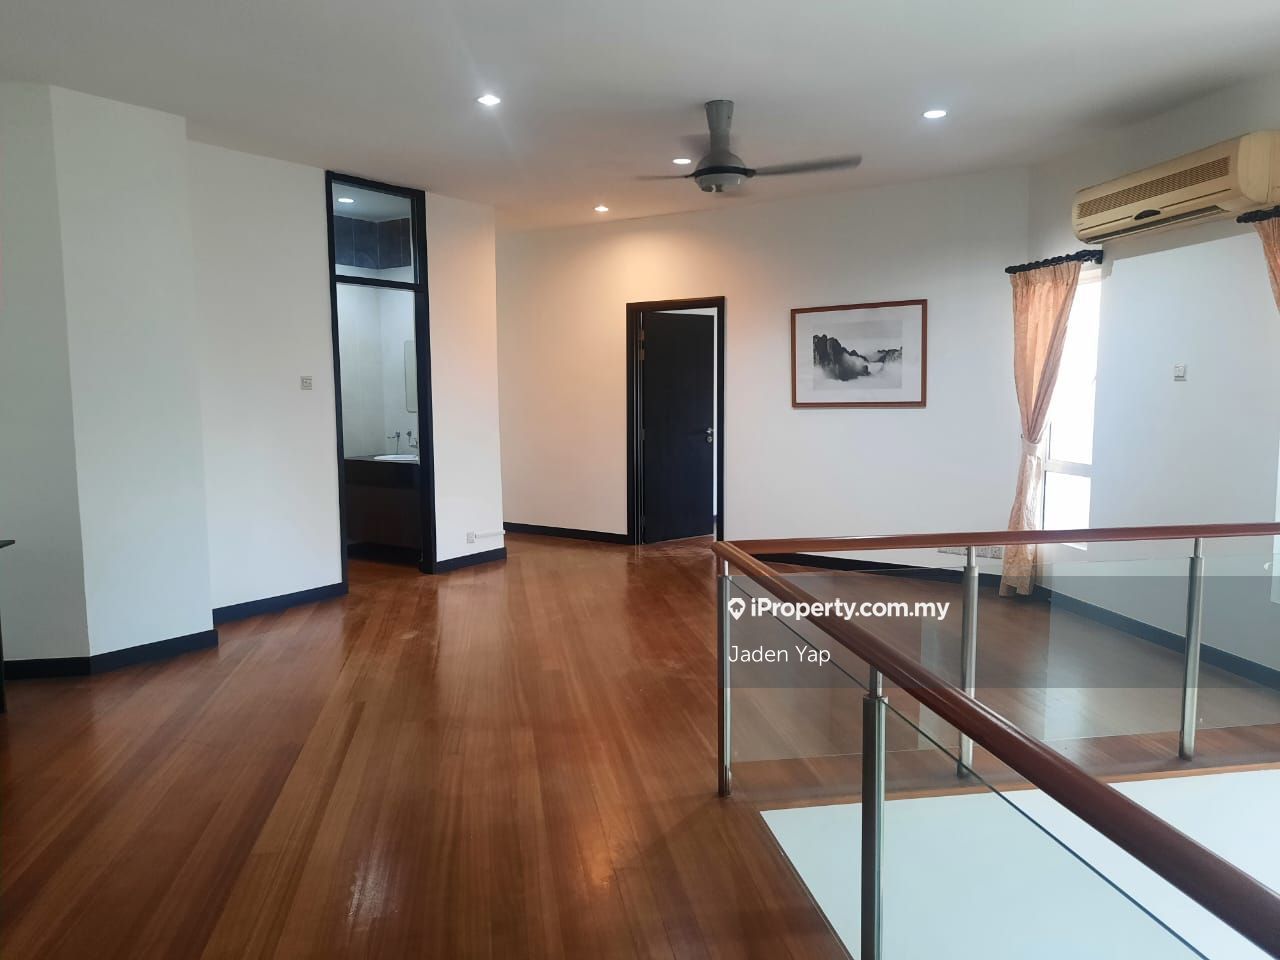 Hartamas Regency 2 Condominium 5+2 bedrooms for rent in Dutamas, Kuala ...